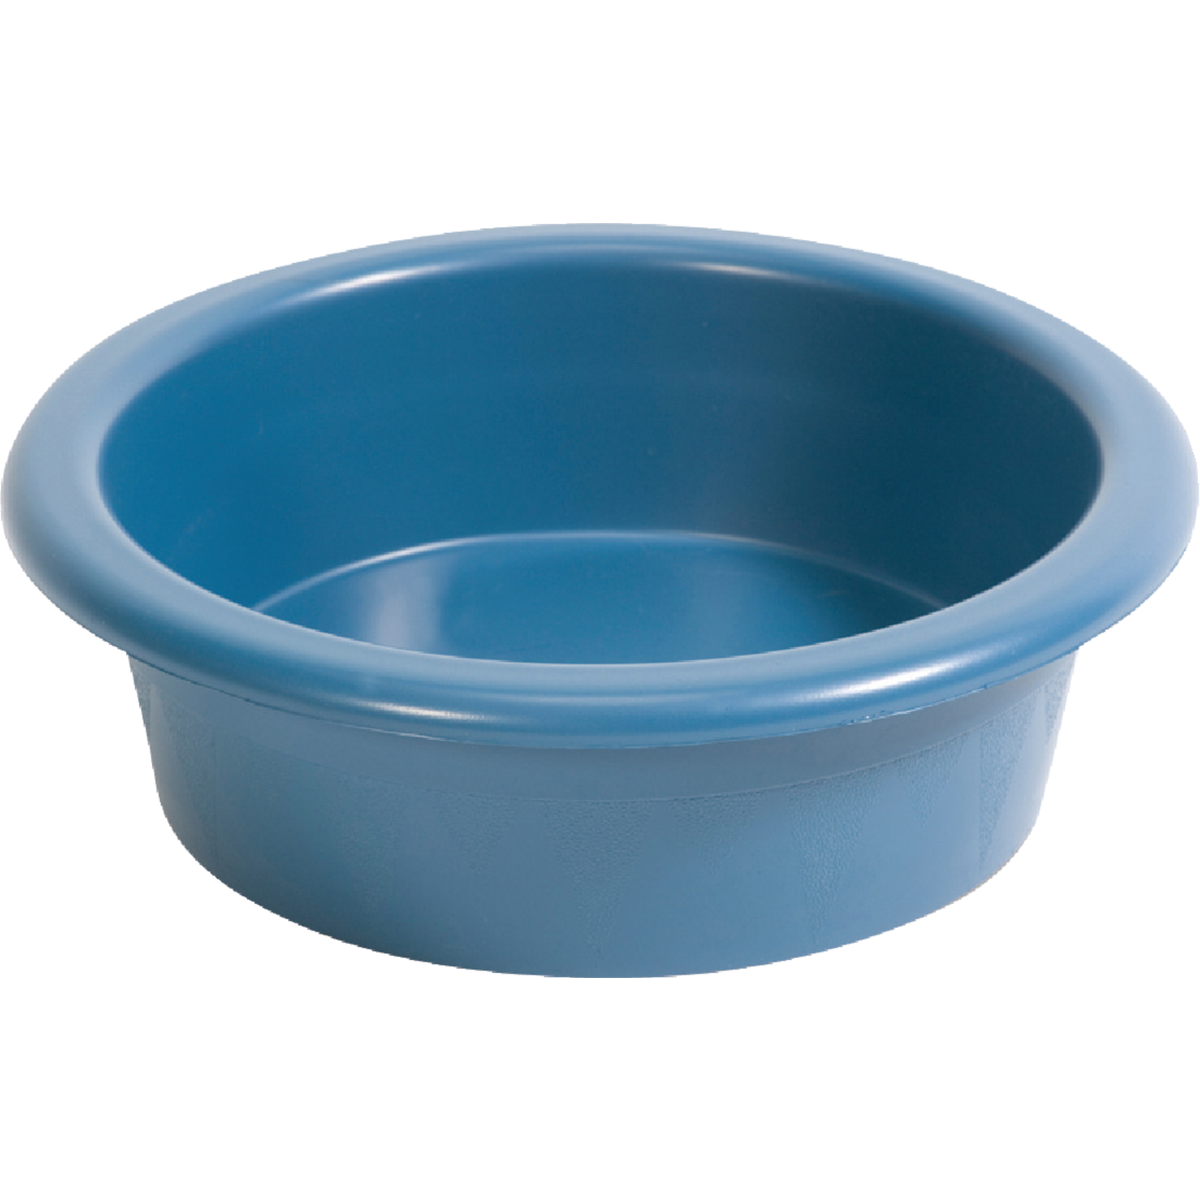 Petmate Crock Bowl For Pets - 4 cup